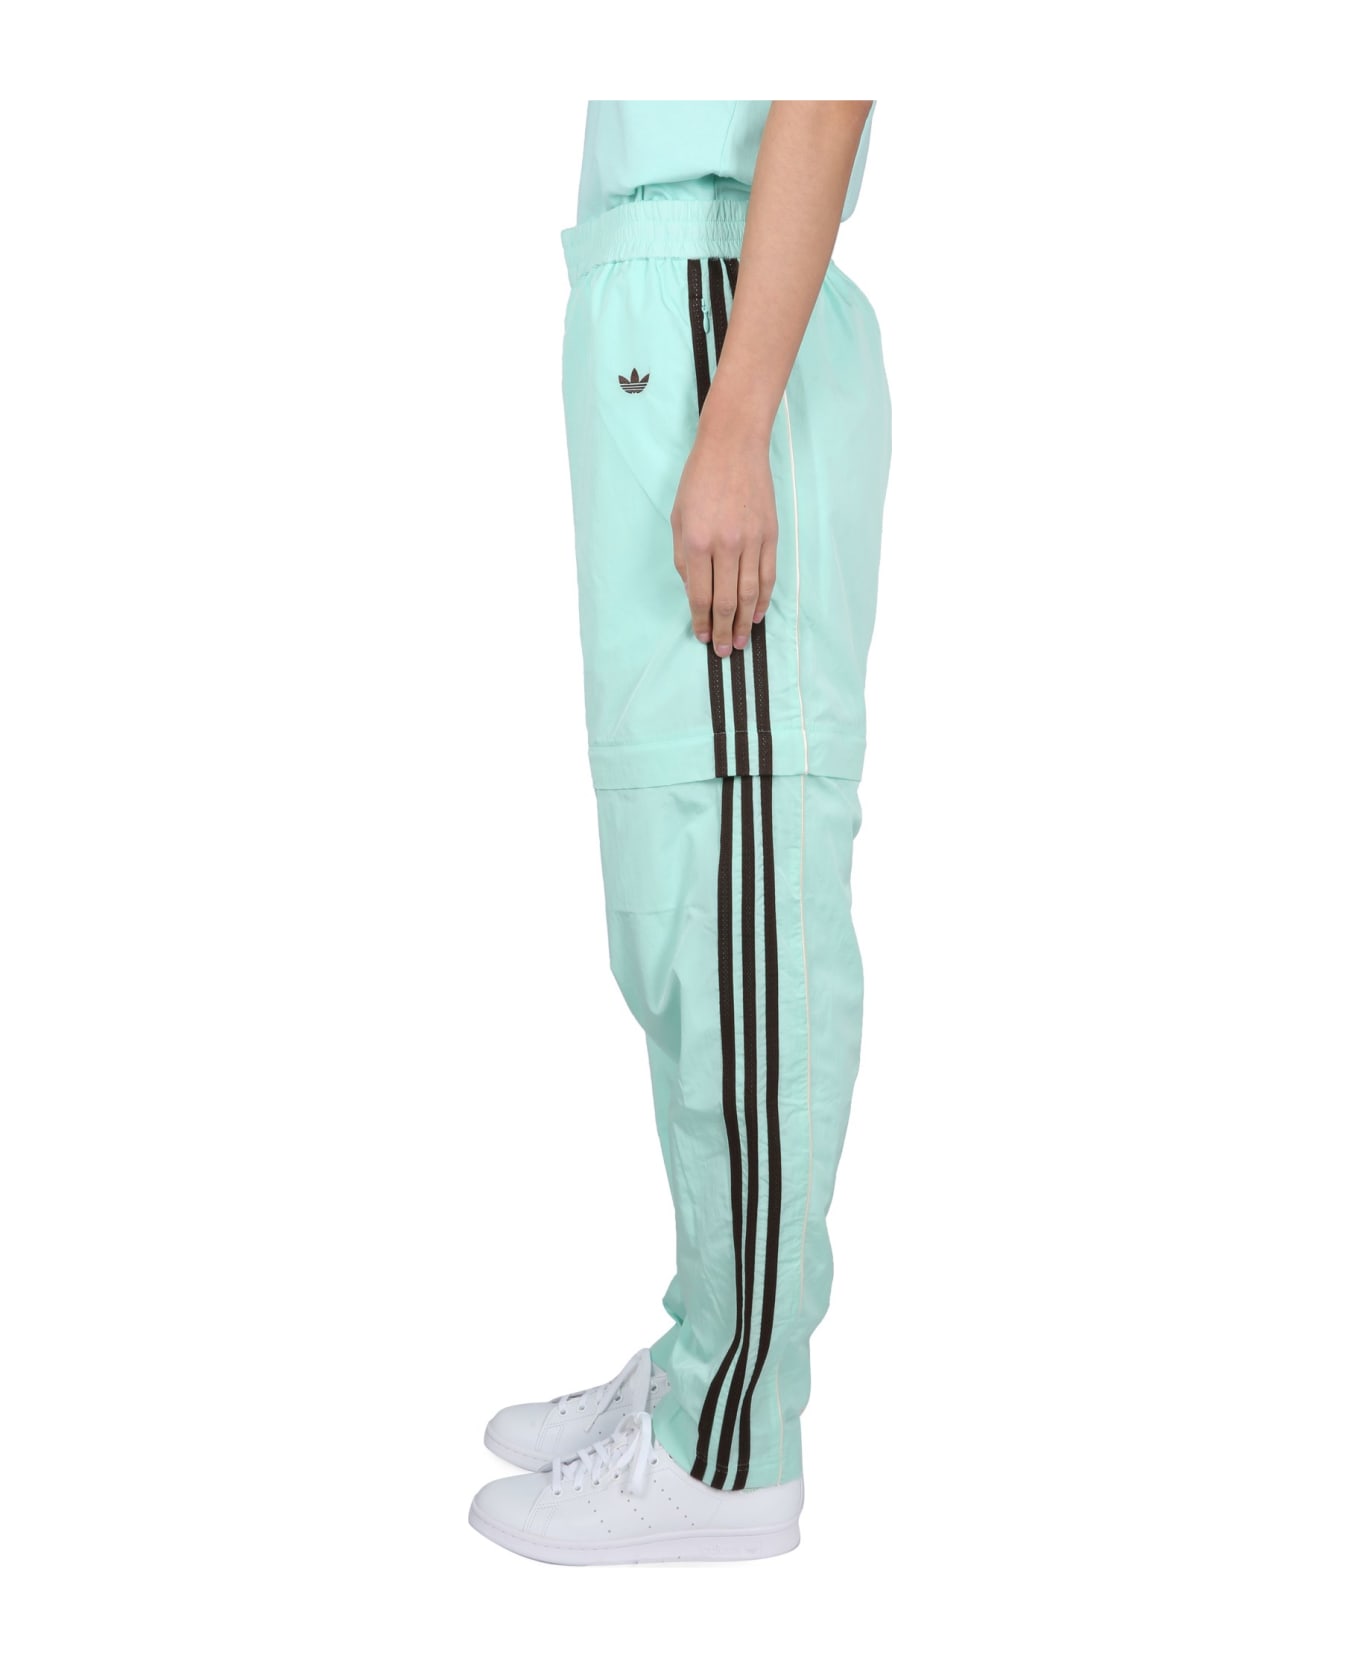 Adidas Originals by Wales Bonner Nylon Jogging Pants With Logo - AZZURRO